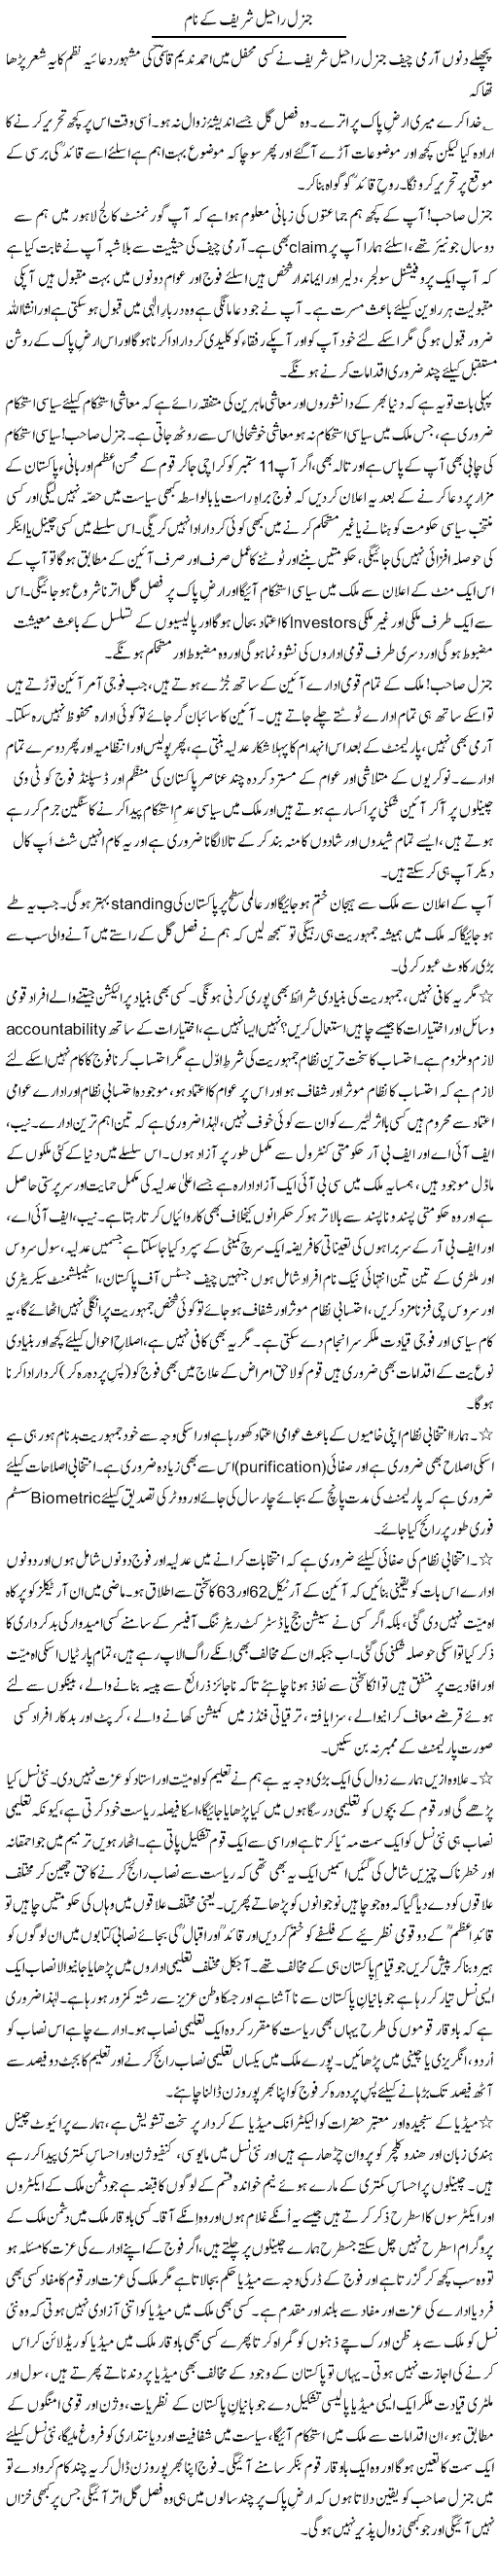 General Raheel Shareef Ke Naam | Zulfiqar Ahmed Cheema | Daily Urdu Columns